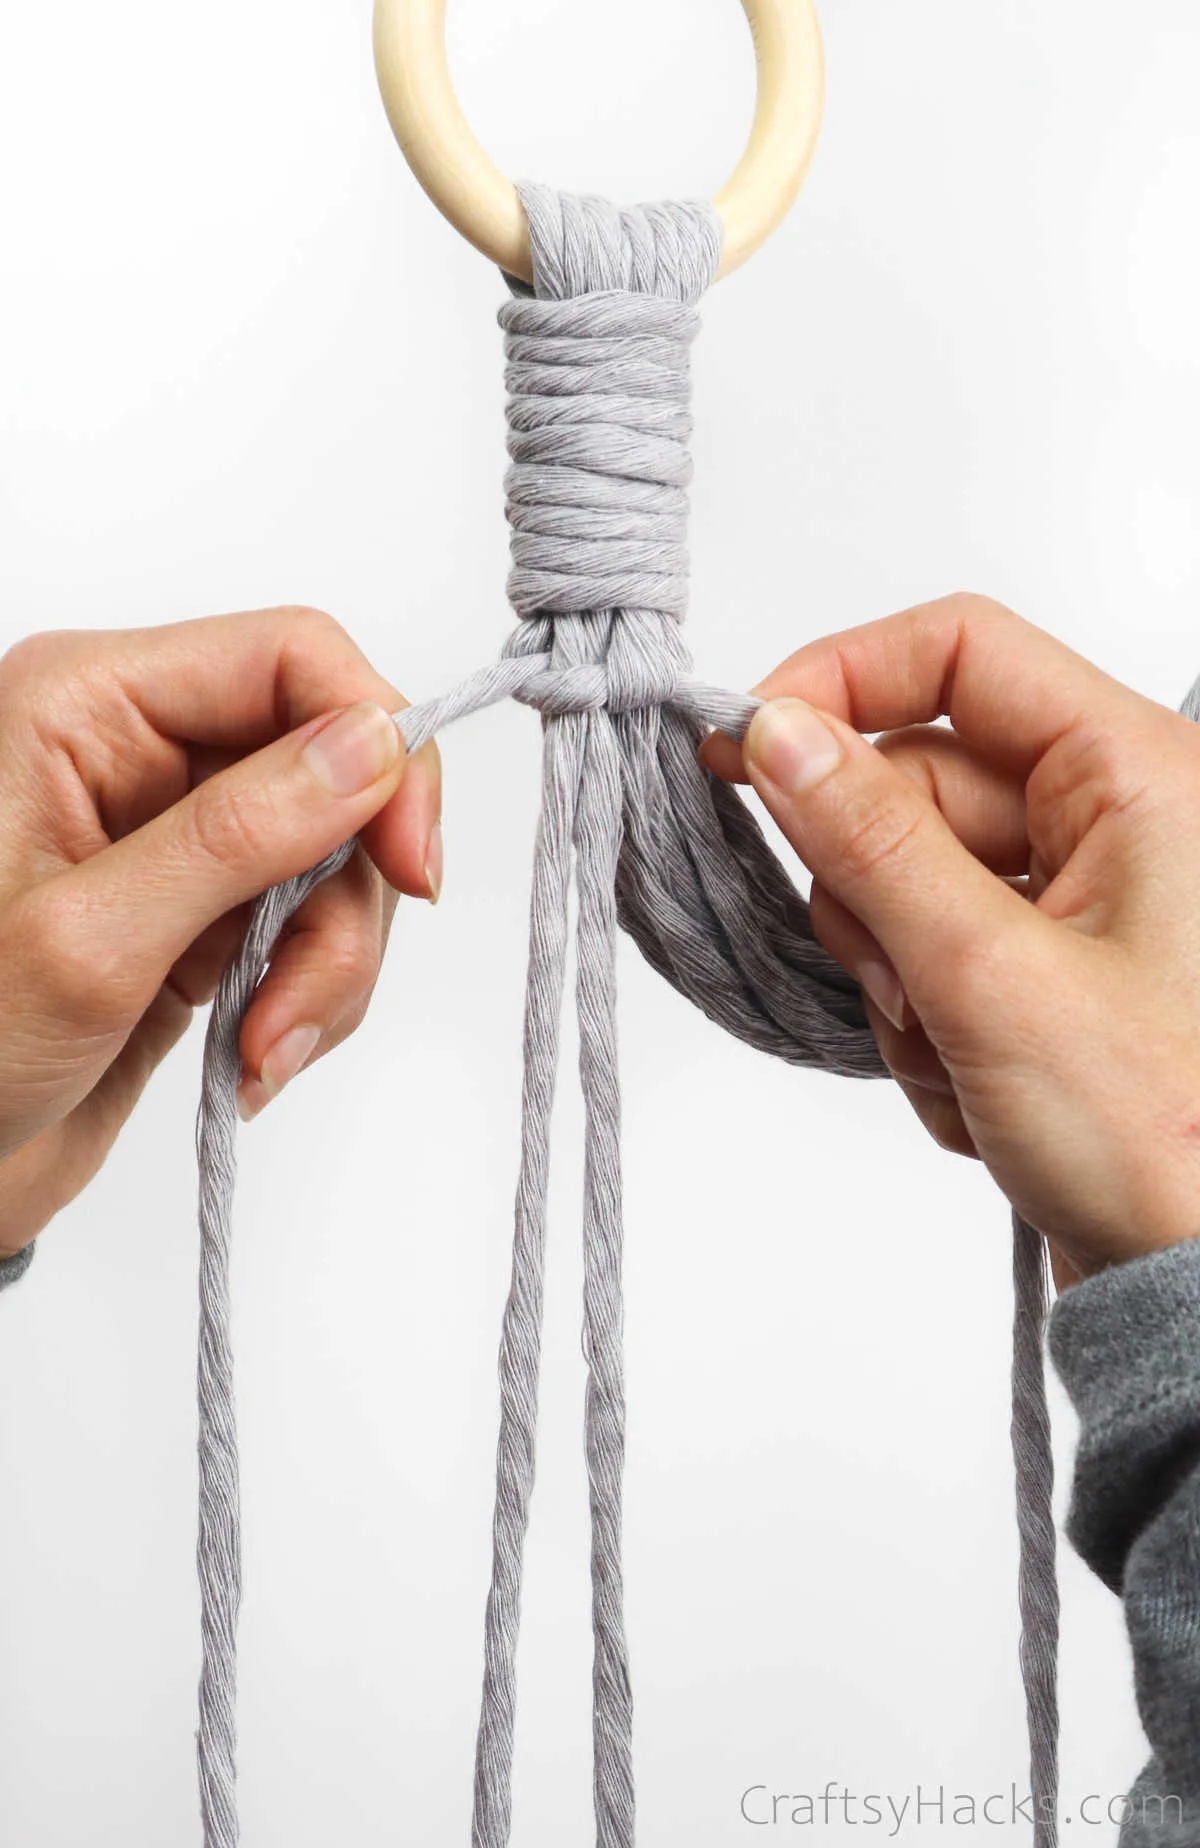 tying knots in string